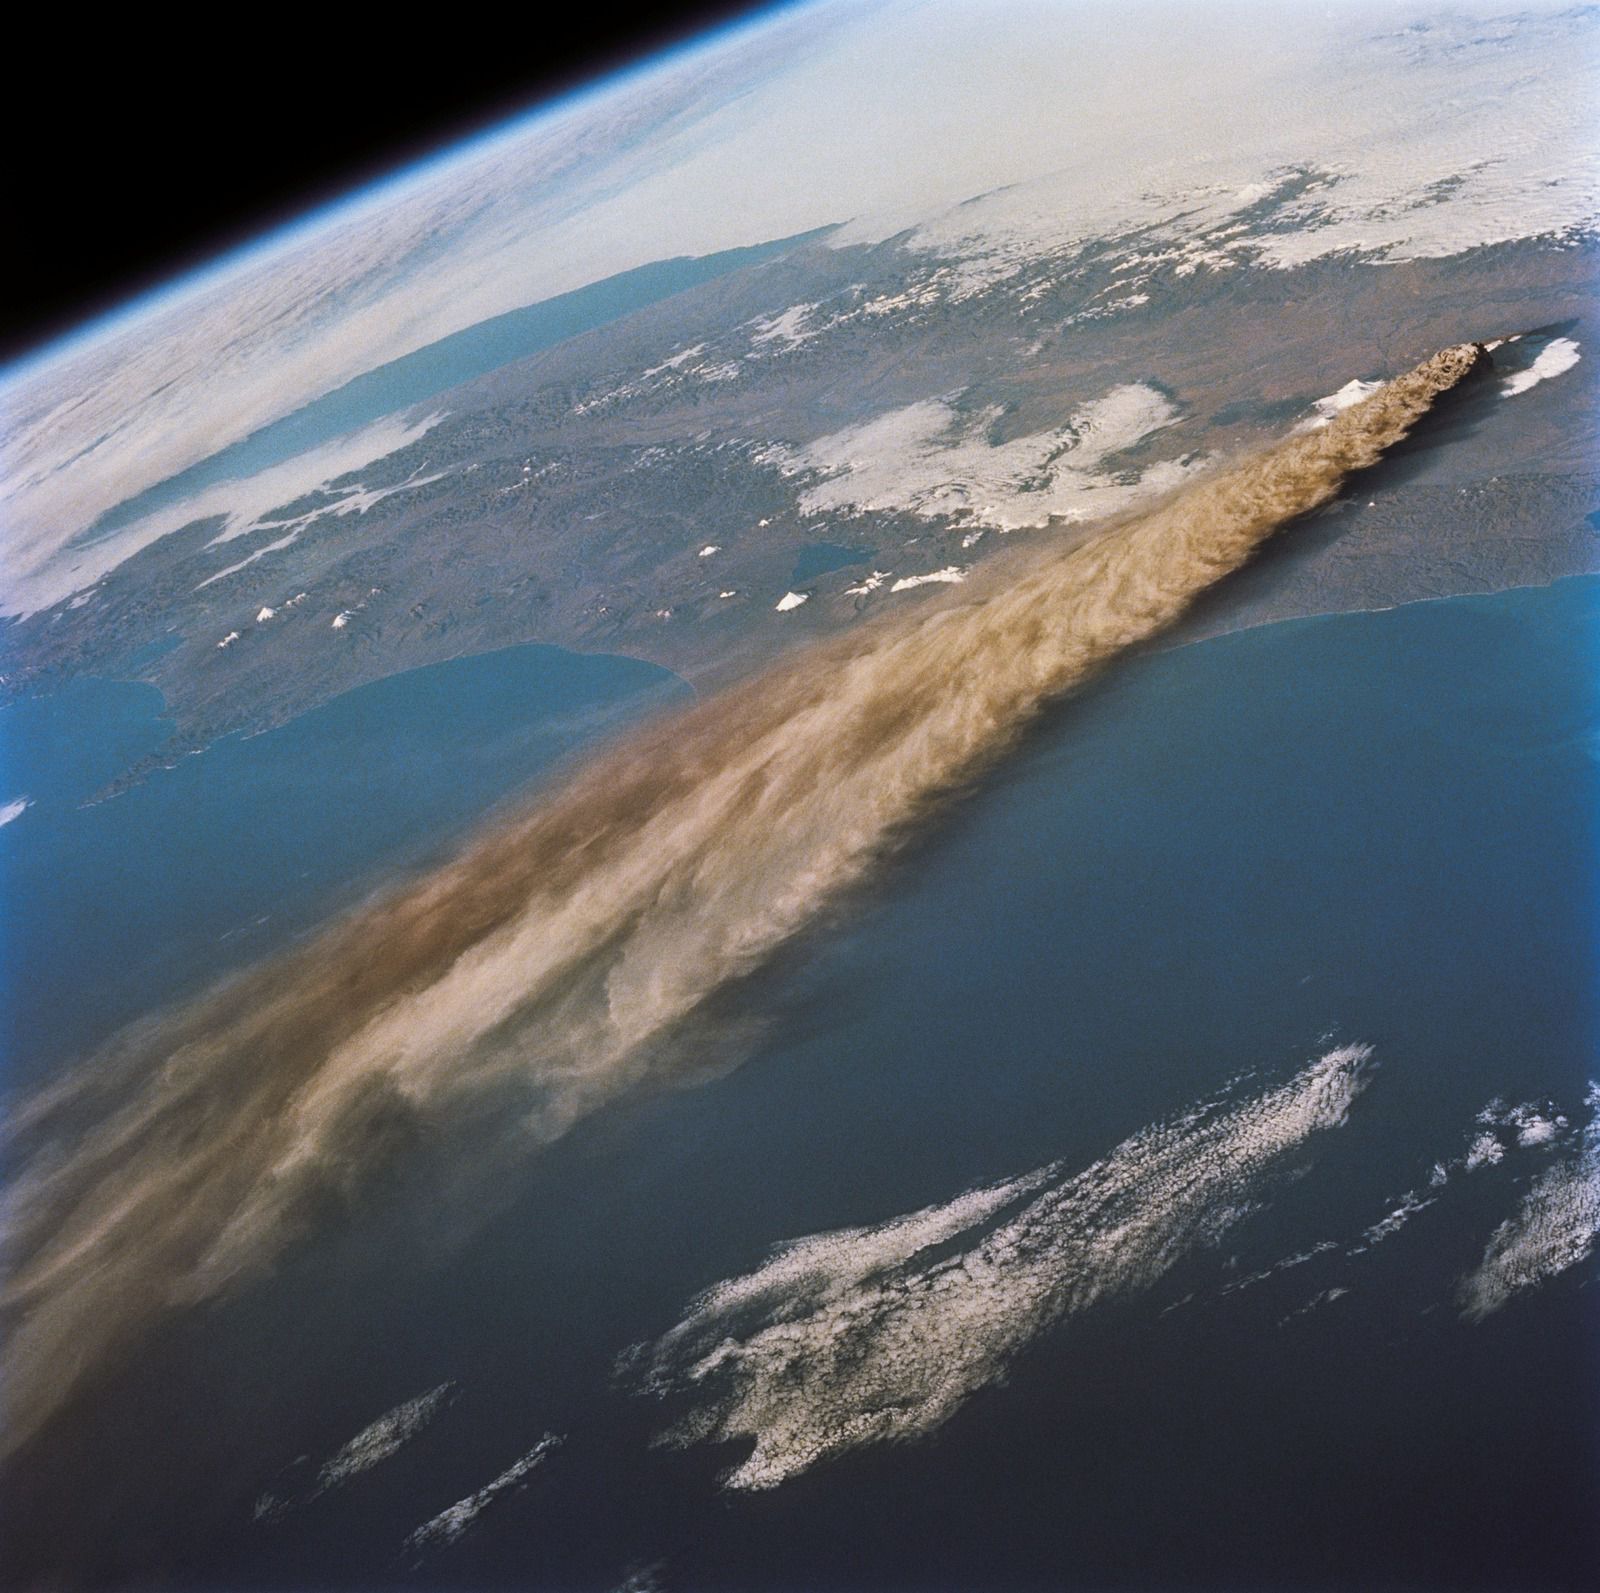 Péninsule du Kamtchatka - Volcan Klioutchevskoï - Klioutchevskaïa Sopka - Russie - Eruption septembre 1994 - Space Shuttle STS68 - NASA - Volcano - Endeavour